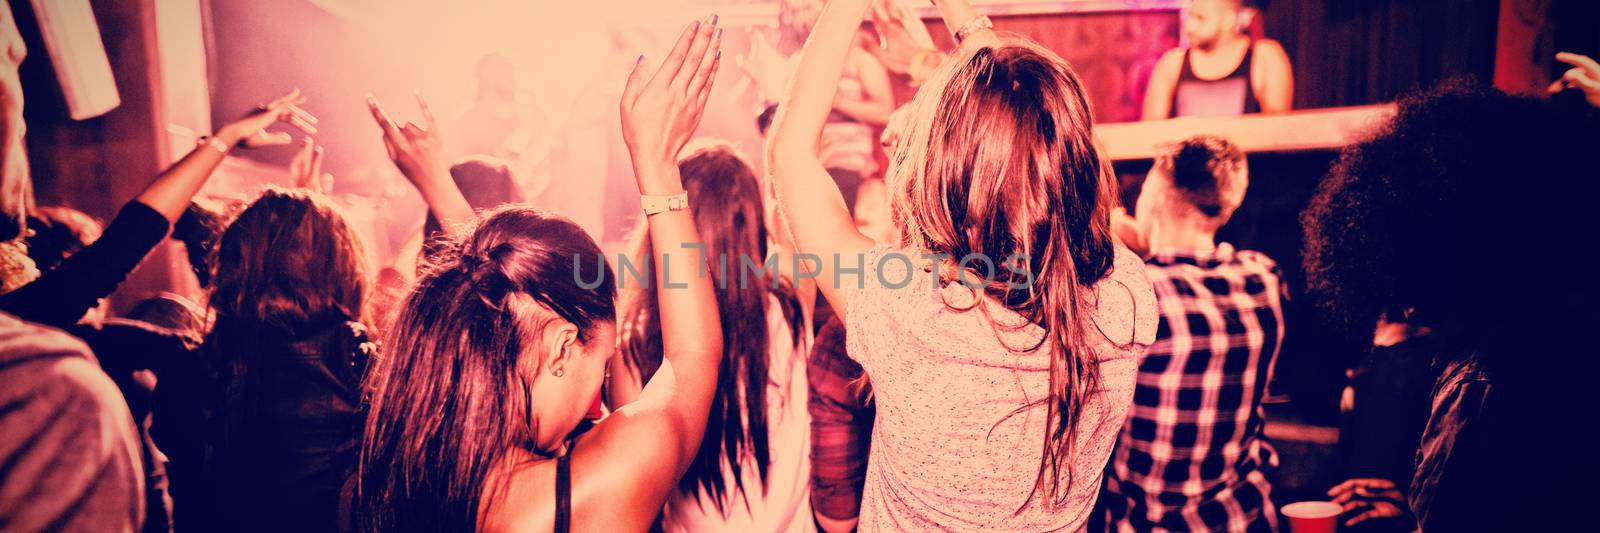 People enjoying in nightclub by Wavebreakmedia